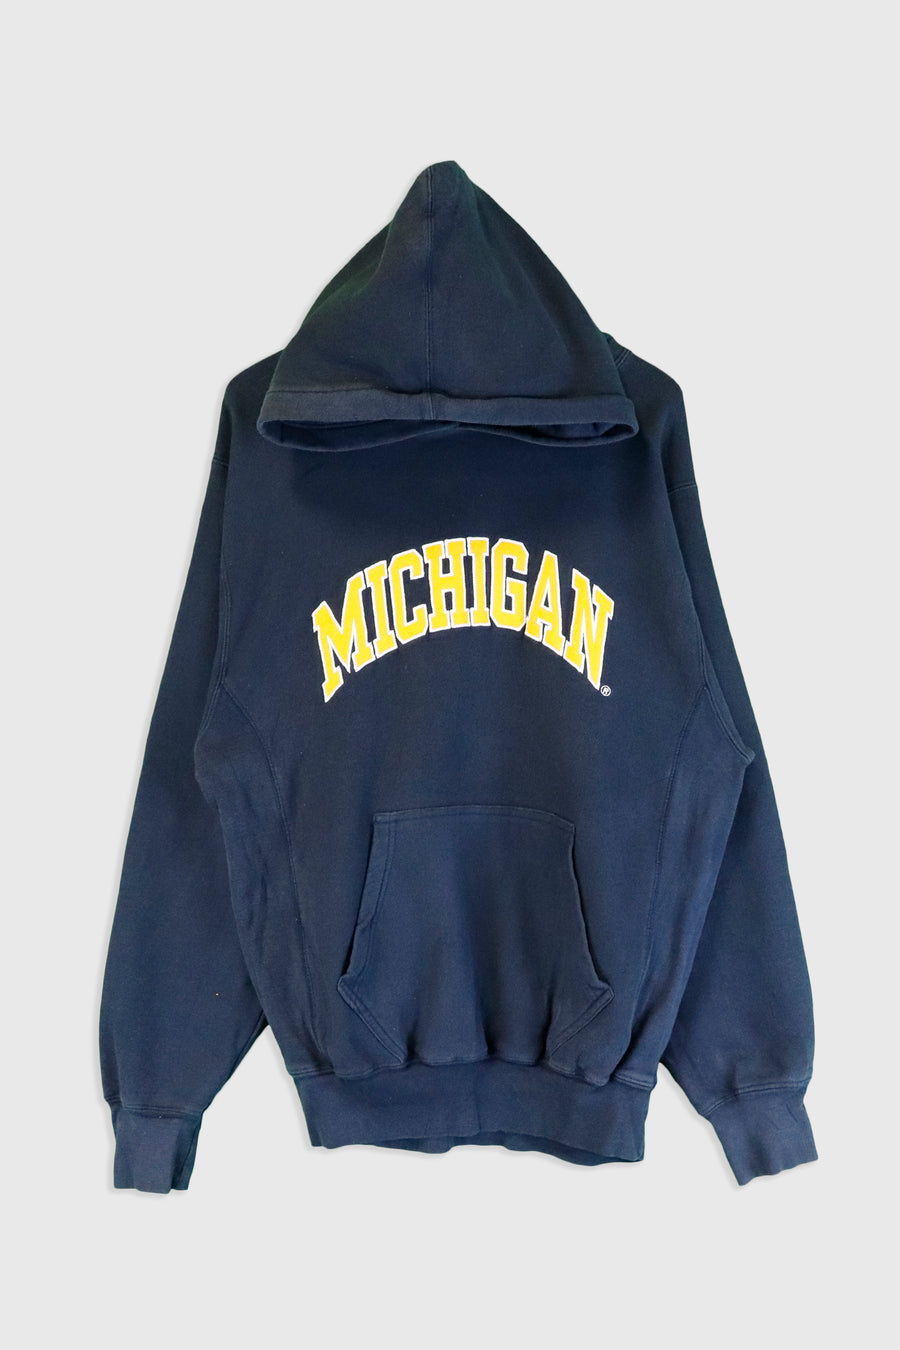 Vintage Michigan State Blank Sweatshirt Sz S